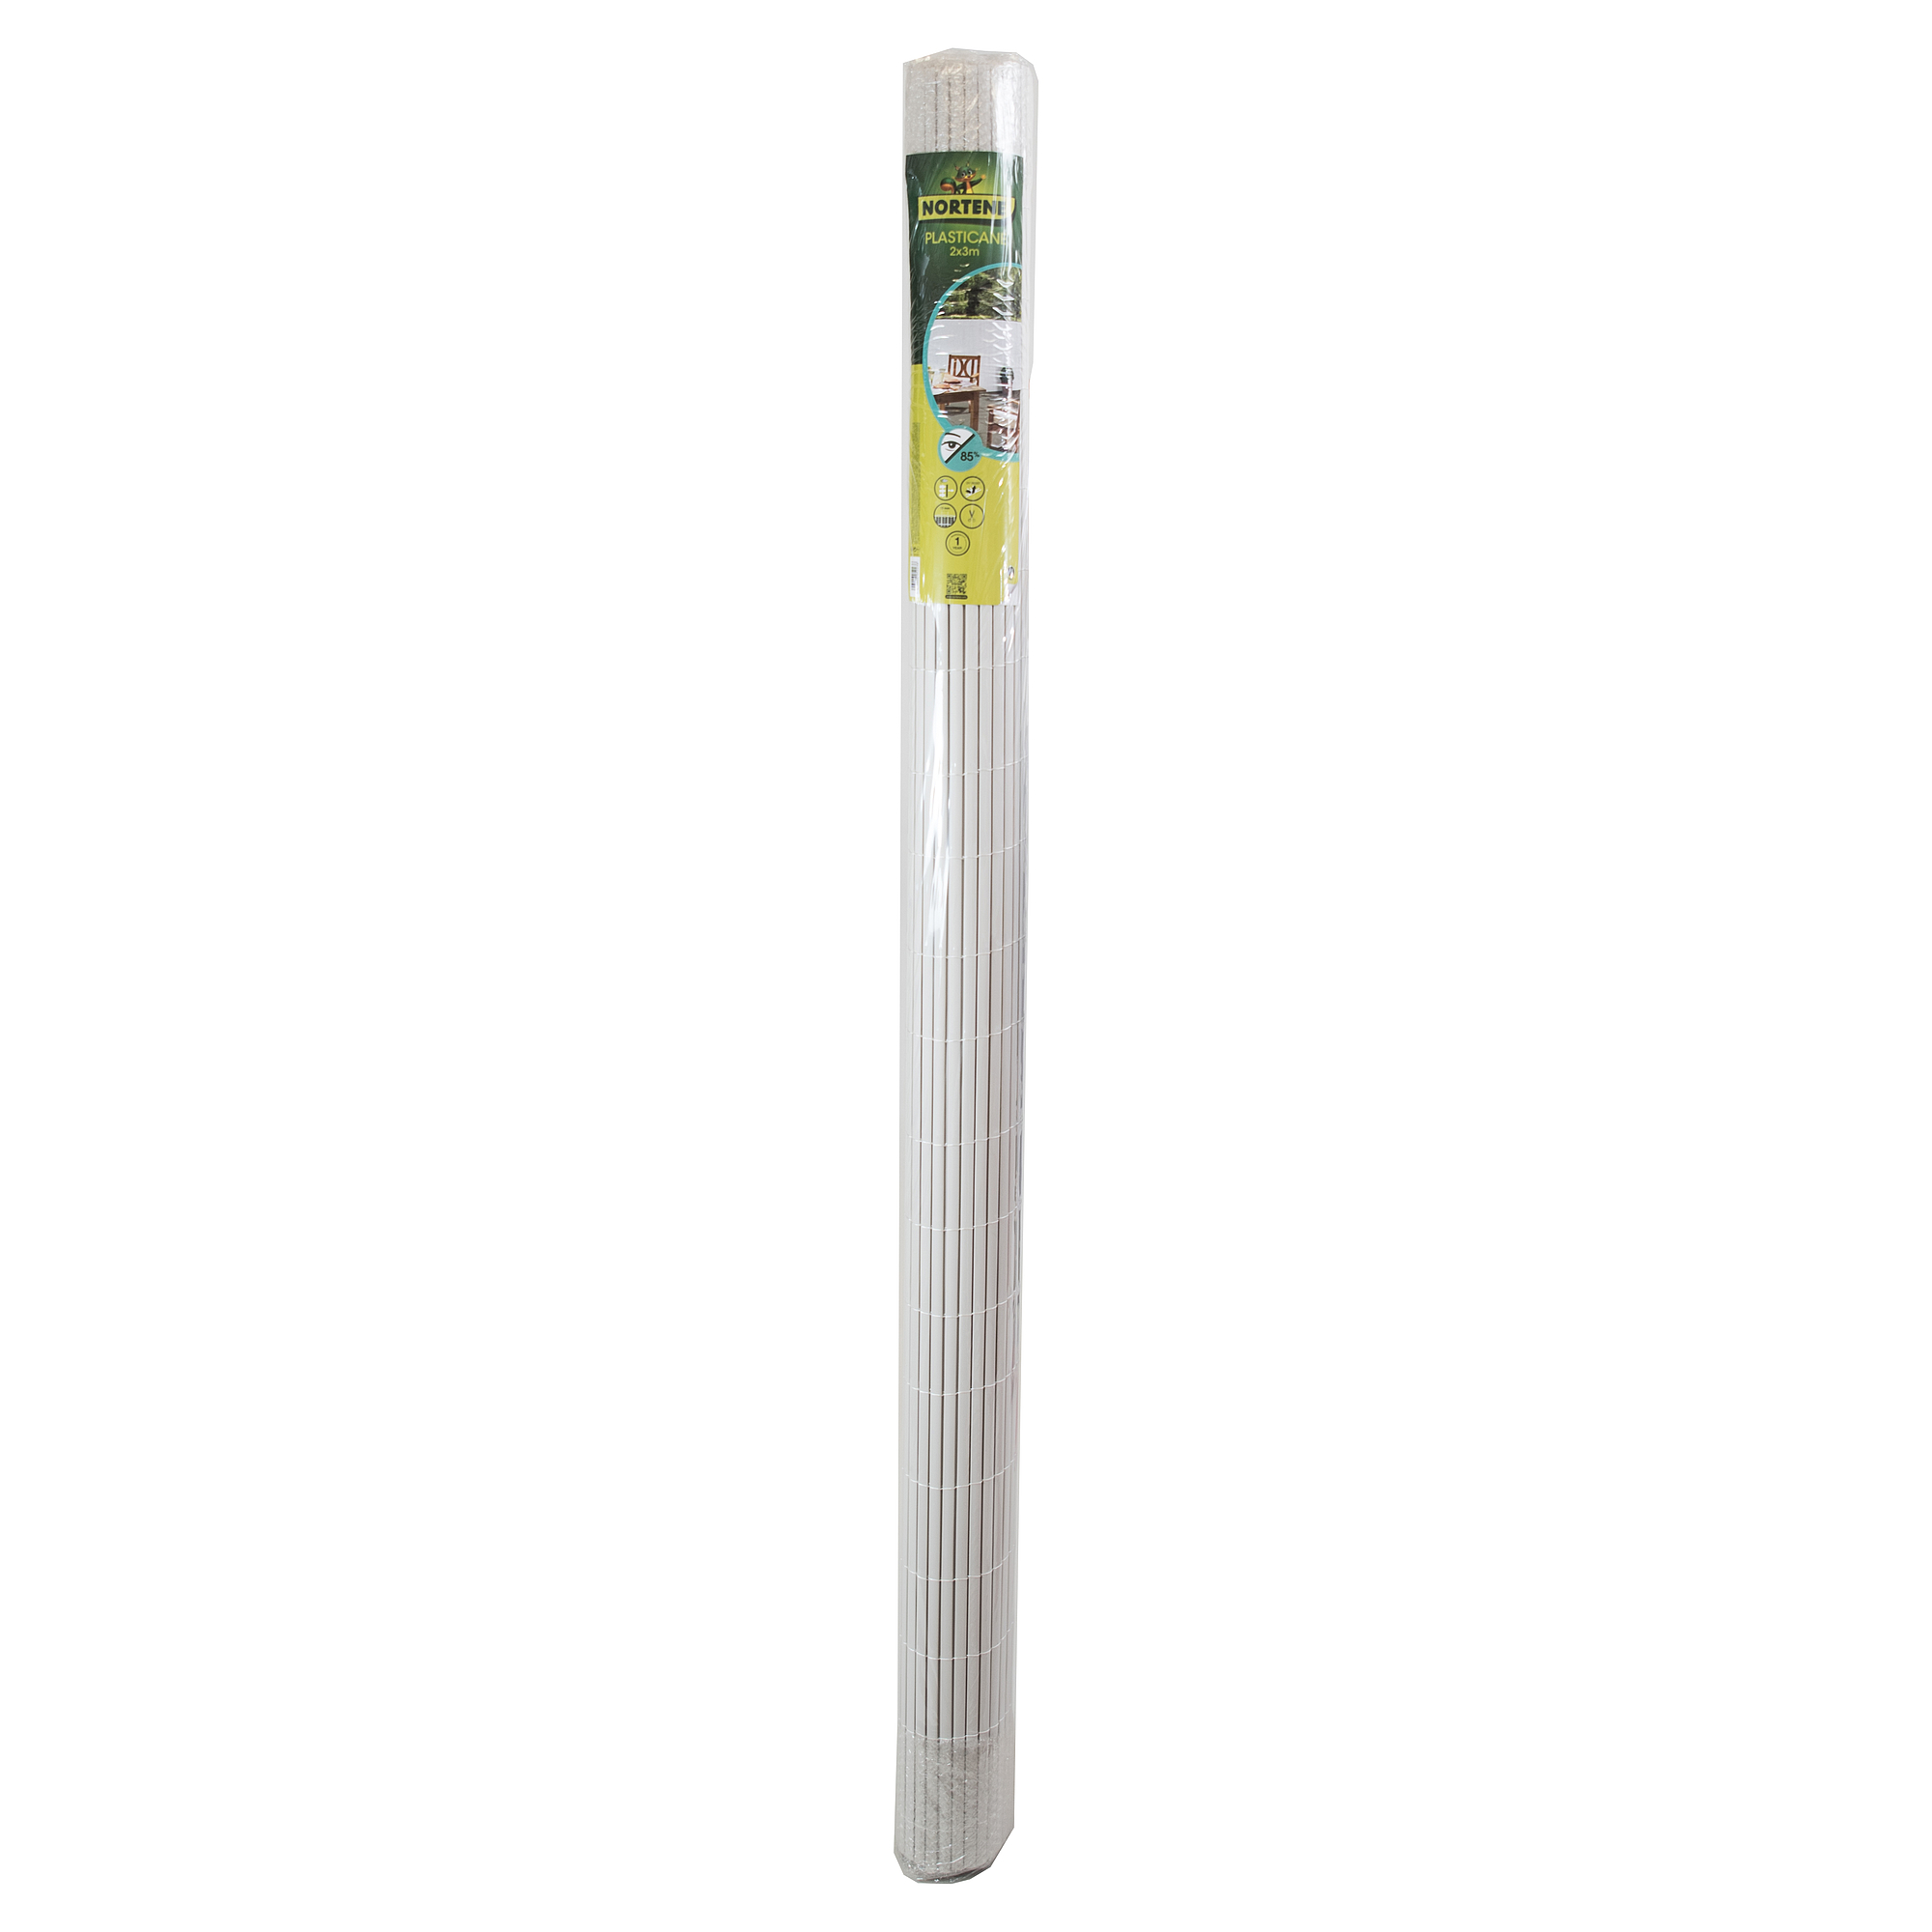 Nortene PLASTICANE OVAL ovális profilú műanyag nád, 13 mm, PVC - 2 x 3 m -  fehér - 2012331